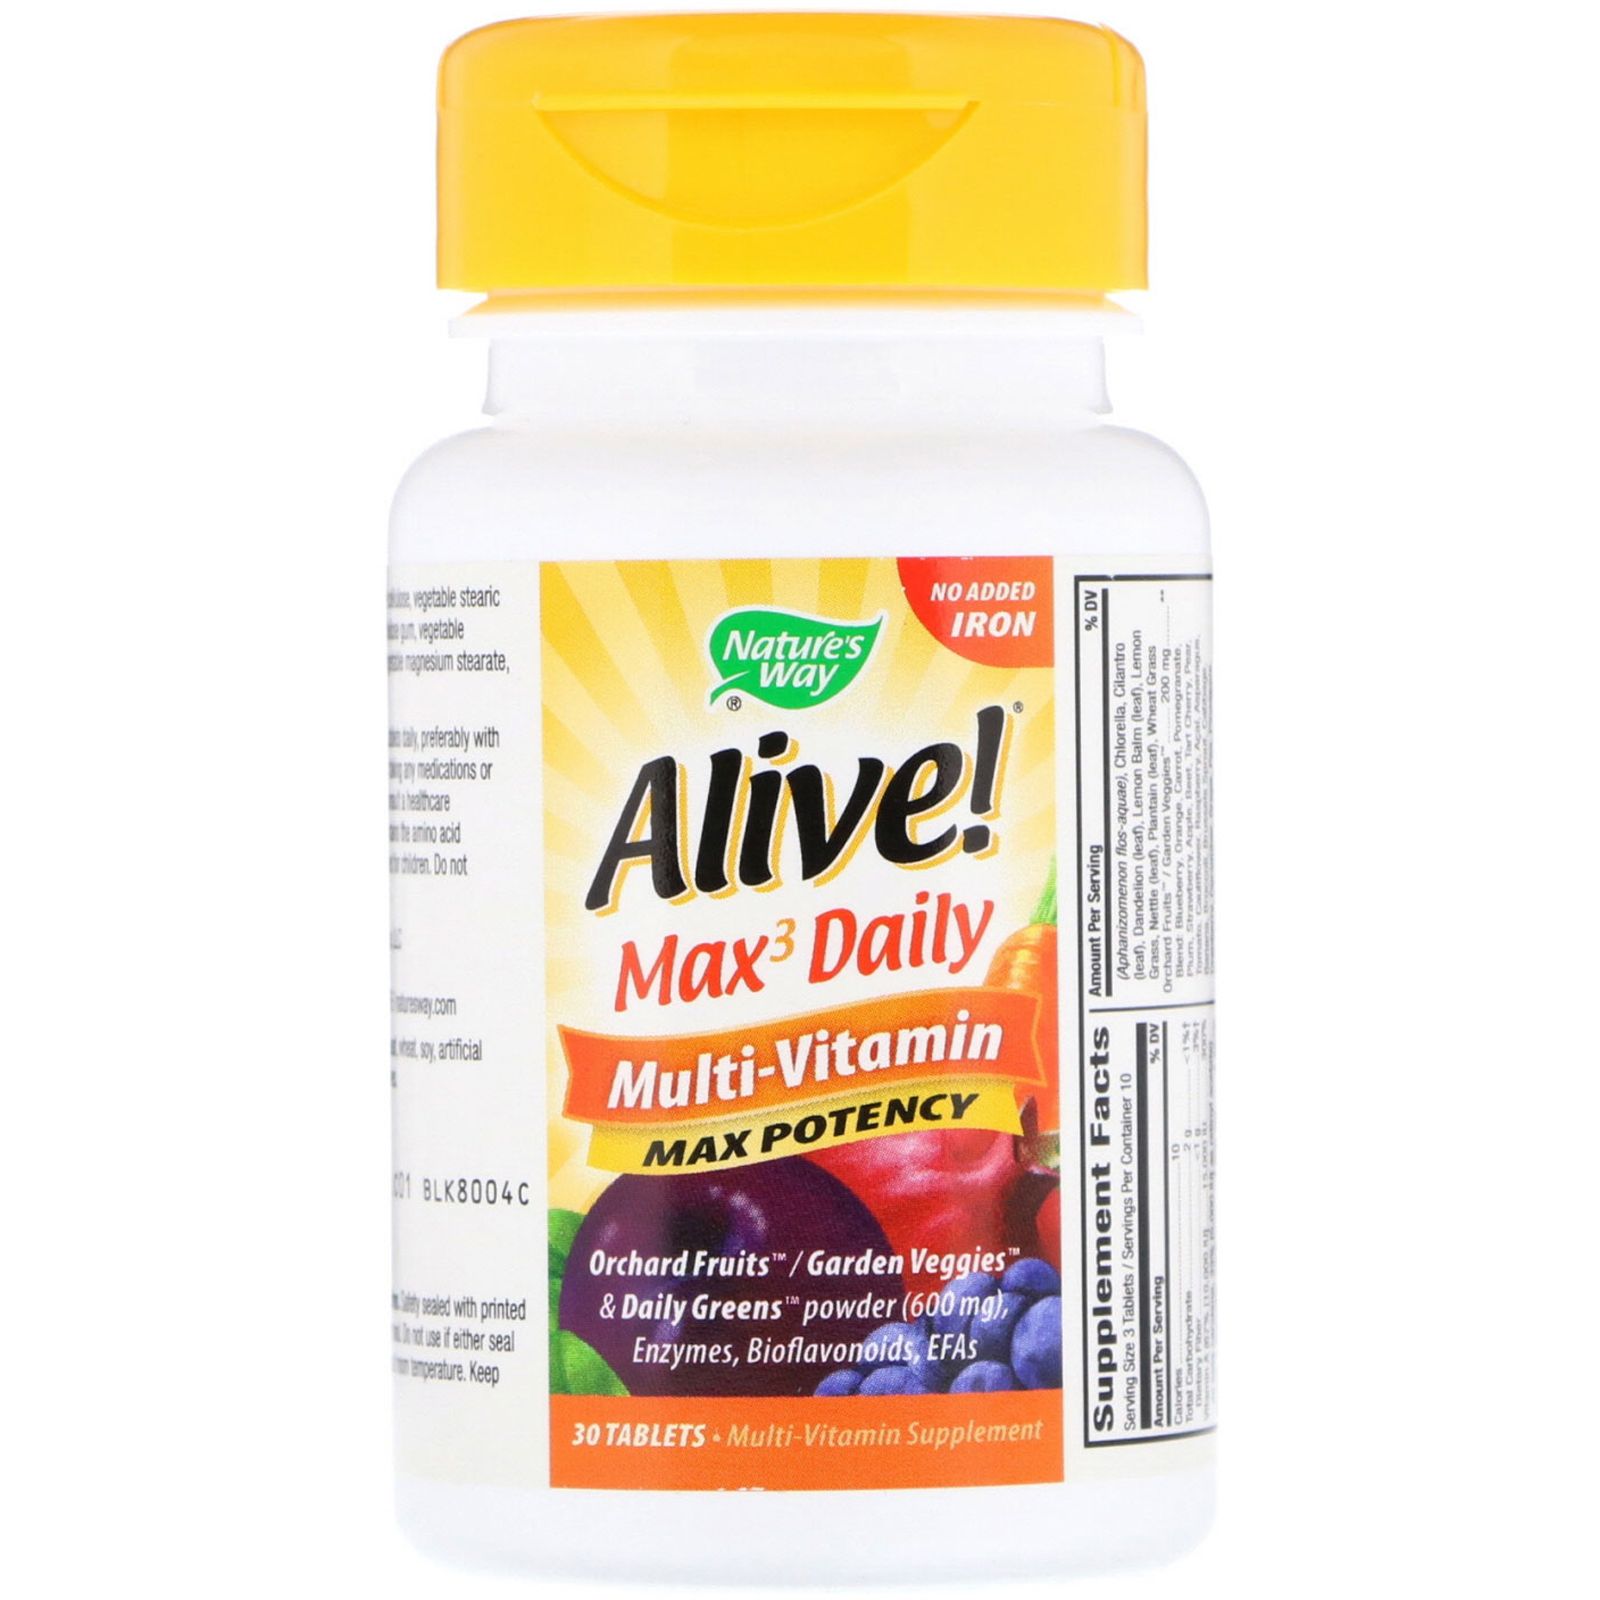 Iron vitamin. Max3 Daily, мультивитамины. Alive! Max3 Daily мультивитамины таб. №180. Витамины Alive Max. Айрон витамины.